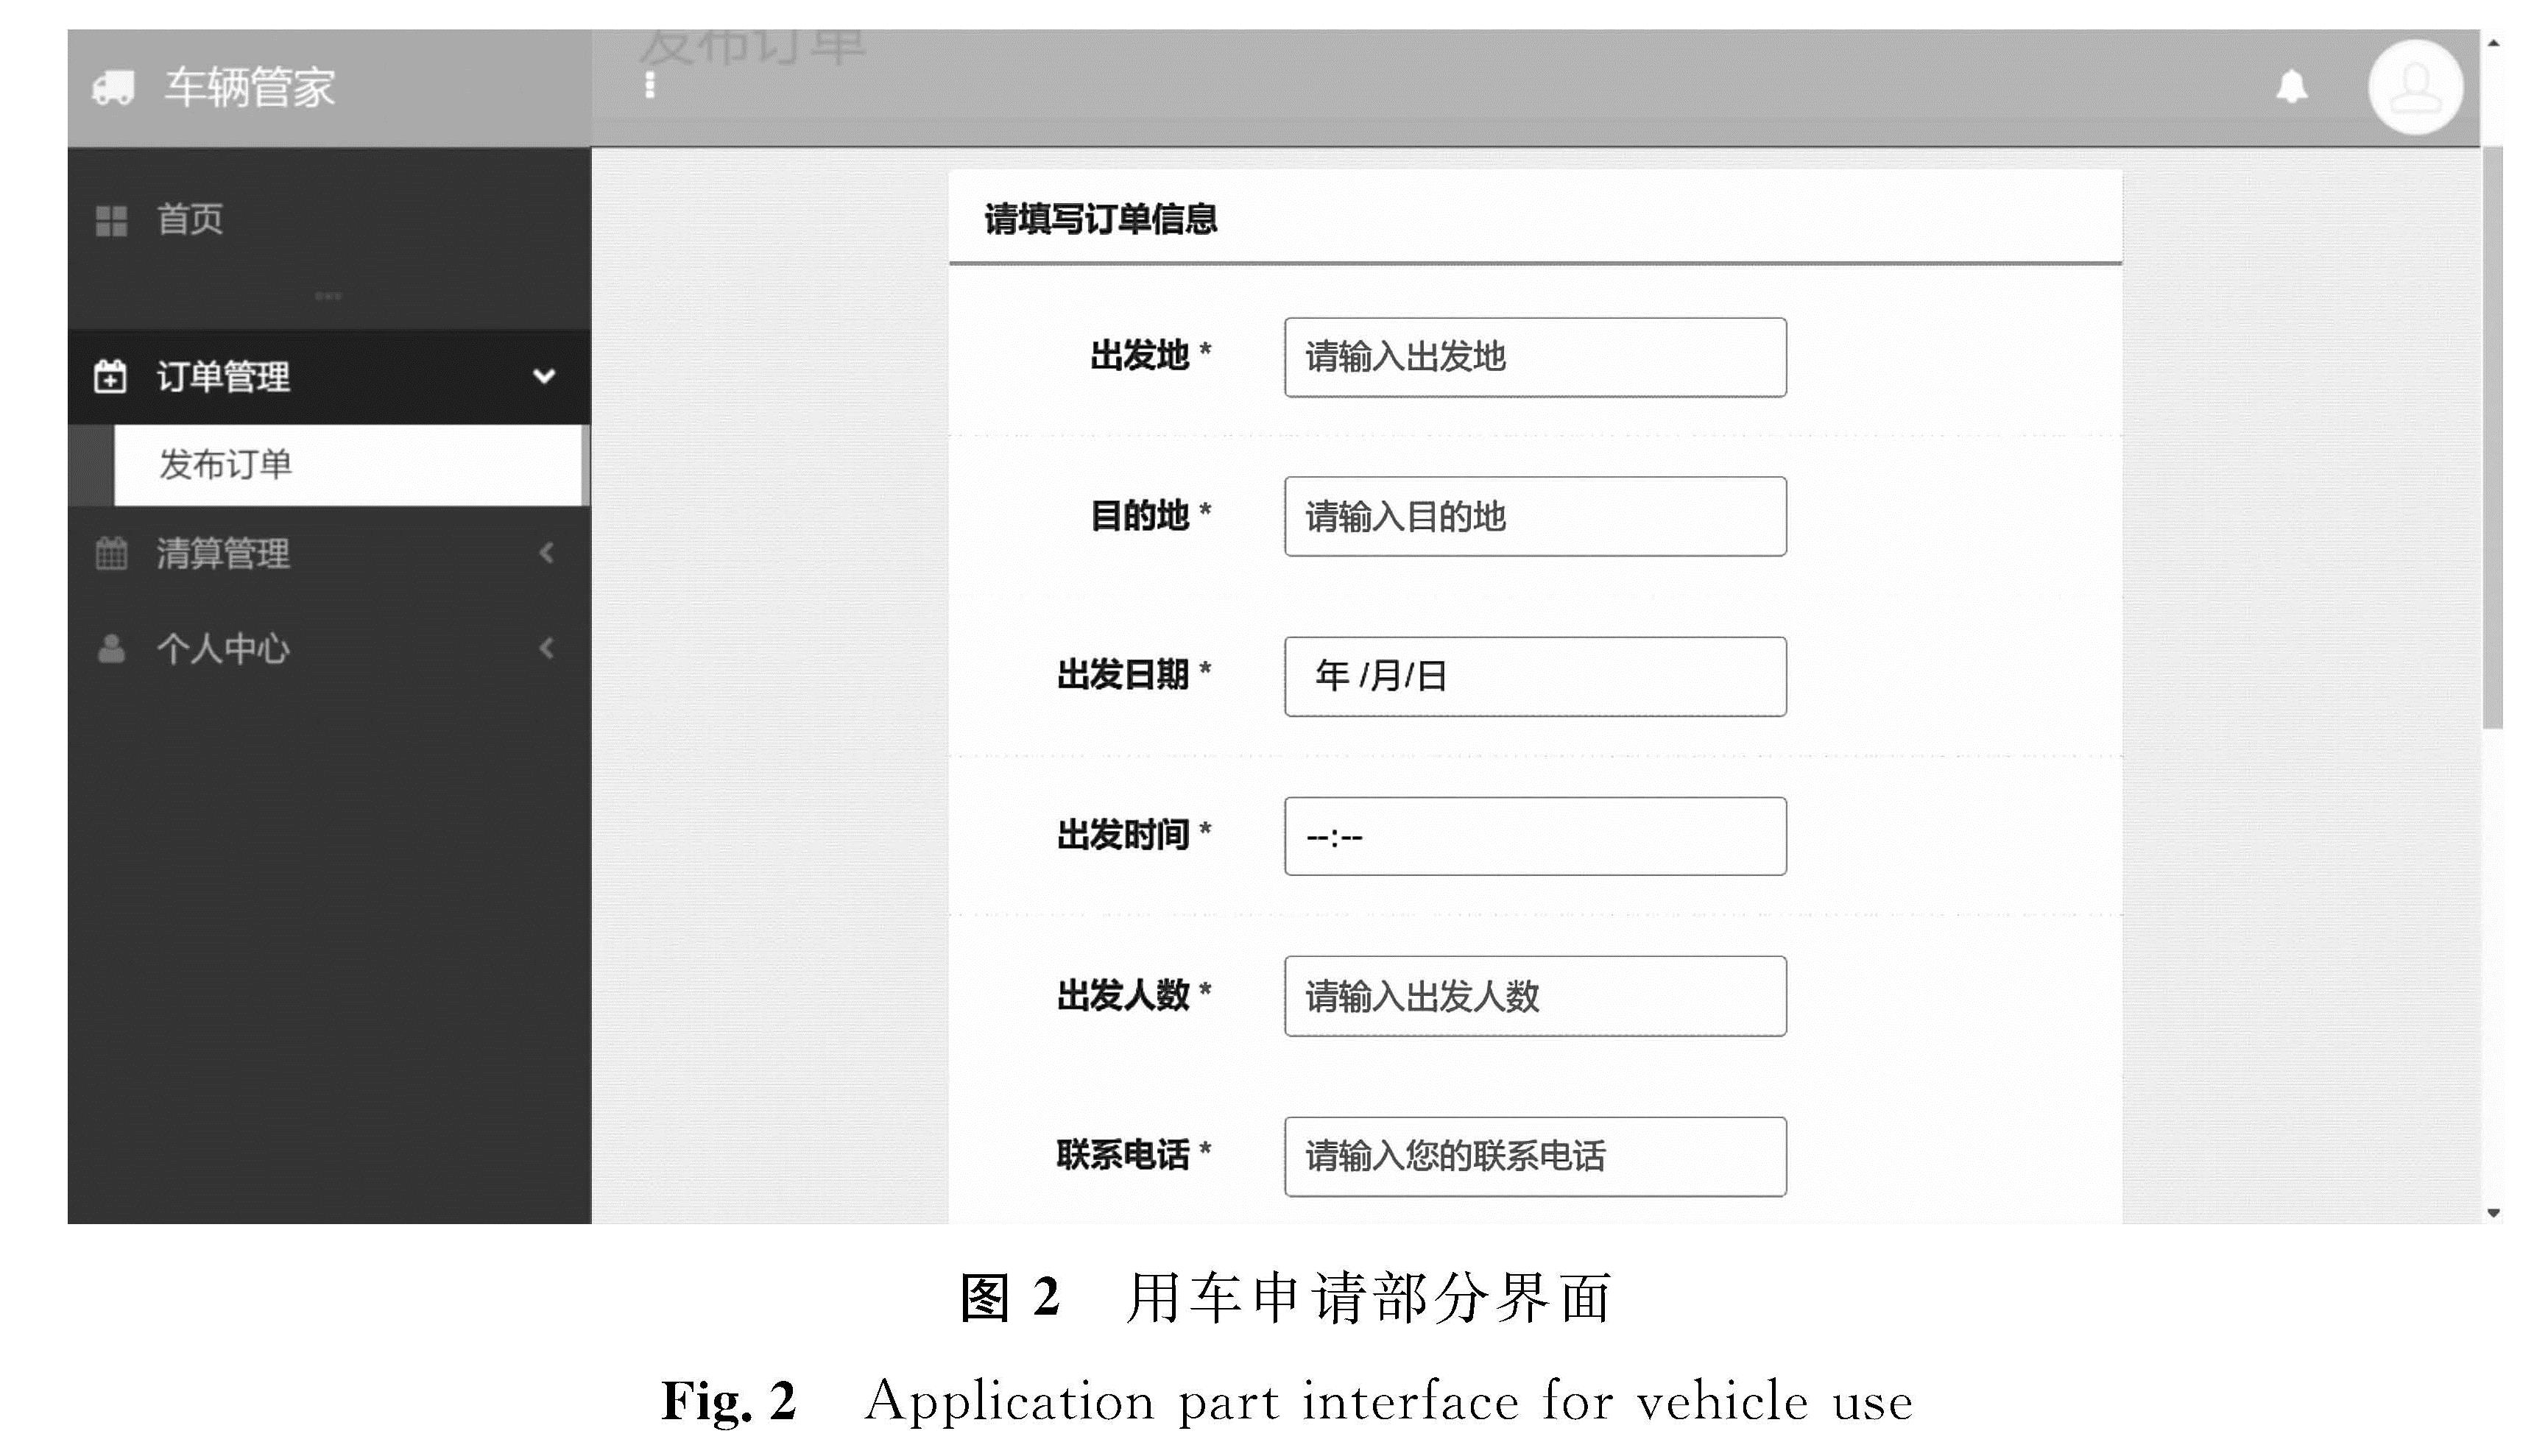 图2 用车申请部分界面<br/>Fig.2 Application part interface for vehicle use